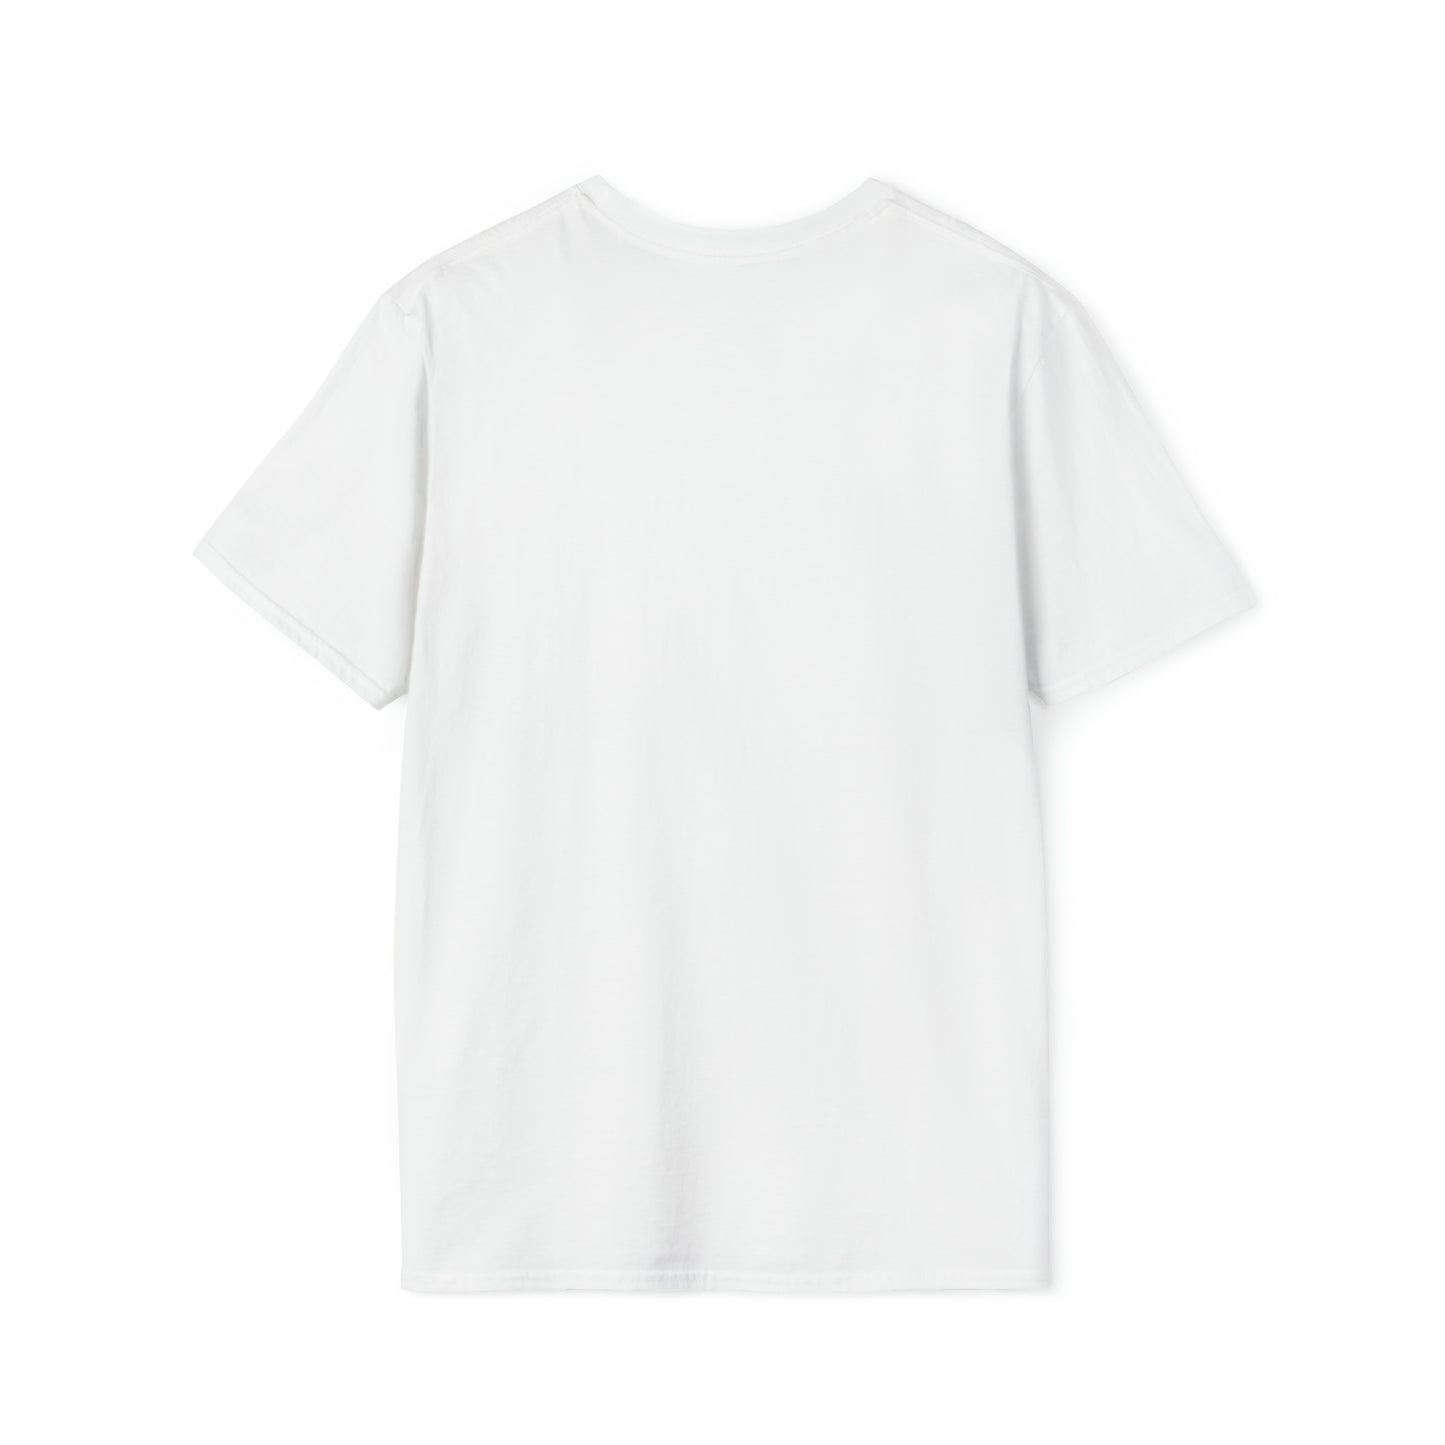 RAYROCK Web DesignUnisex Softstyle T-Shirt